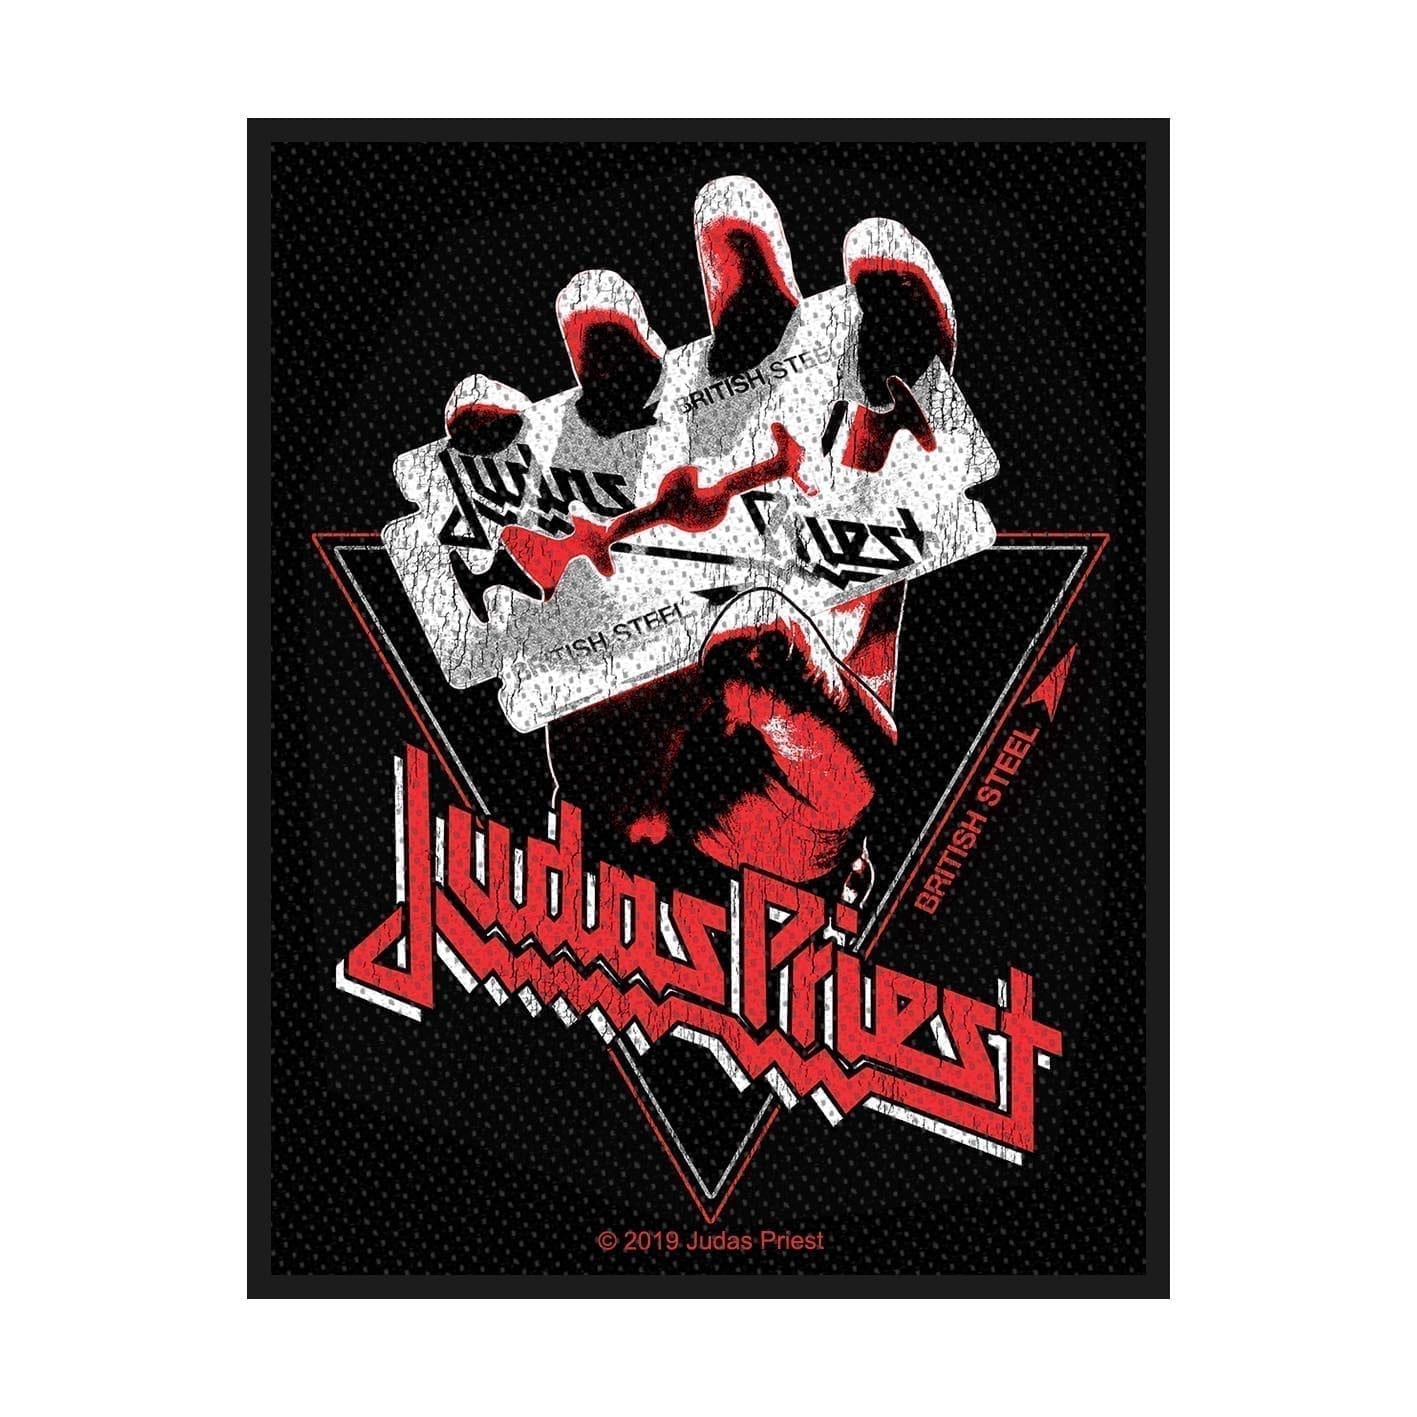 Группа judas priest альбомы. Группа Judas Priest обложки. Бритиш стил джудас прист. Группа Judas Priest 1980. Judas Priest British Steel обложка.